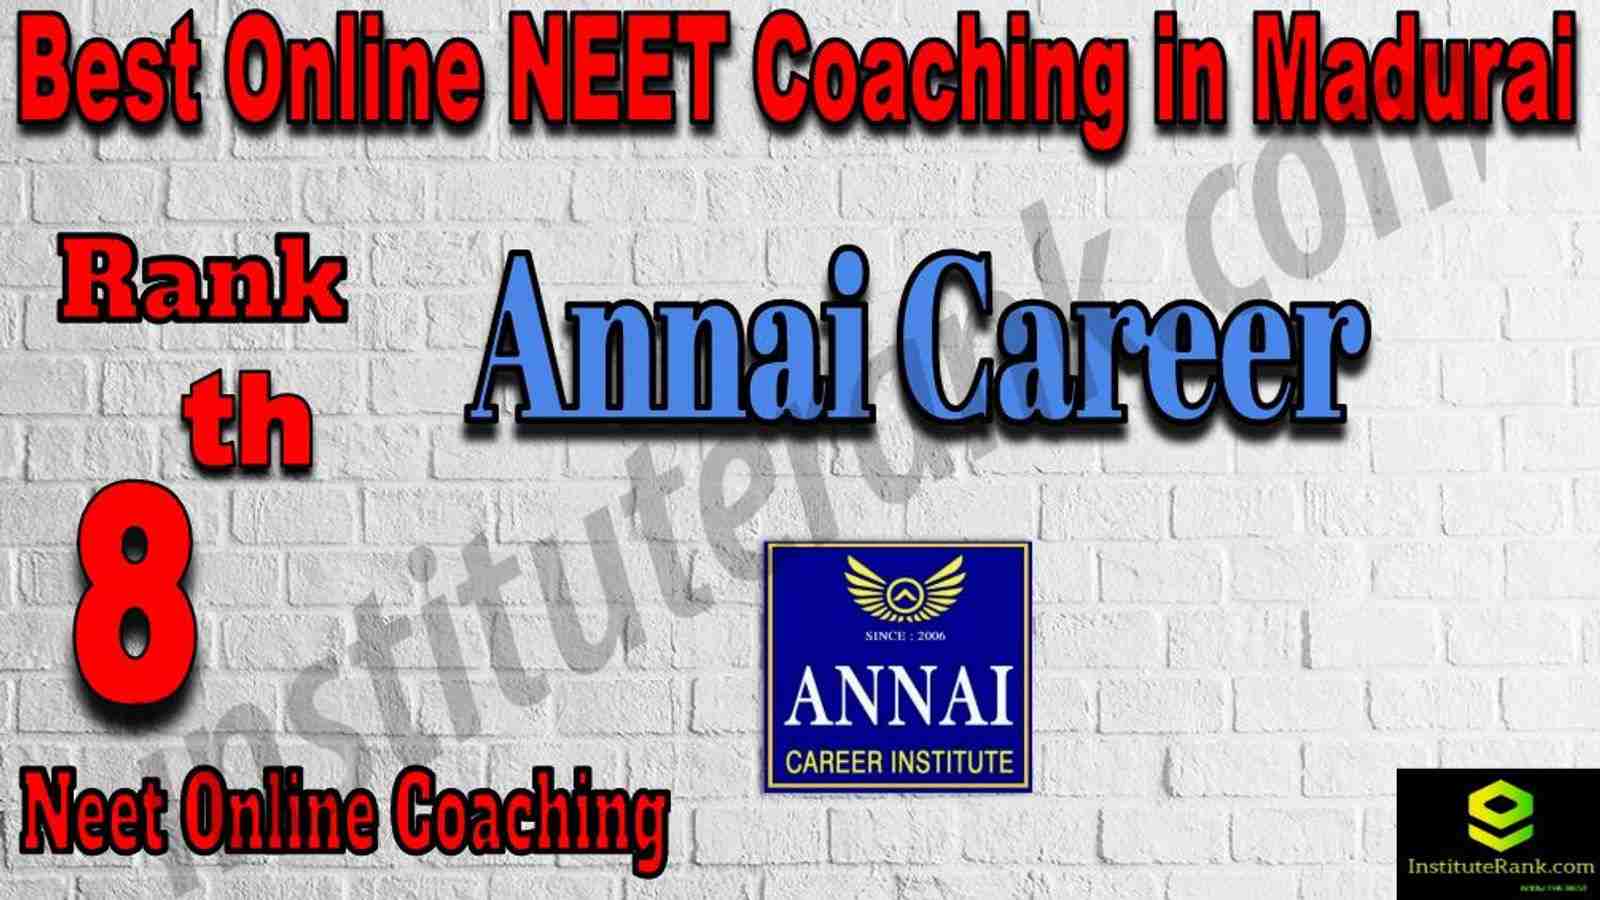 8th Best Online Neet Coaching in Madurai